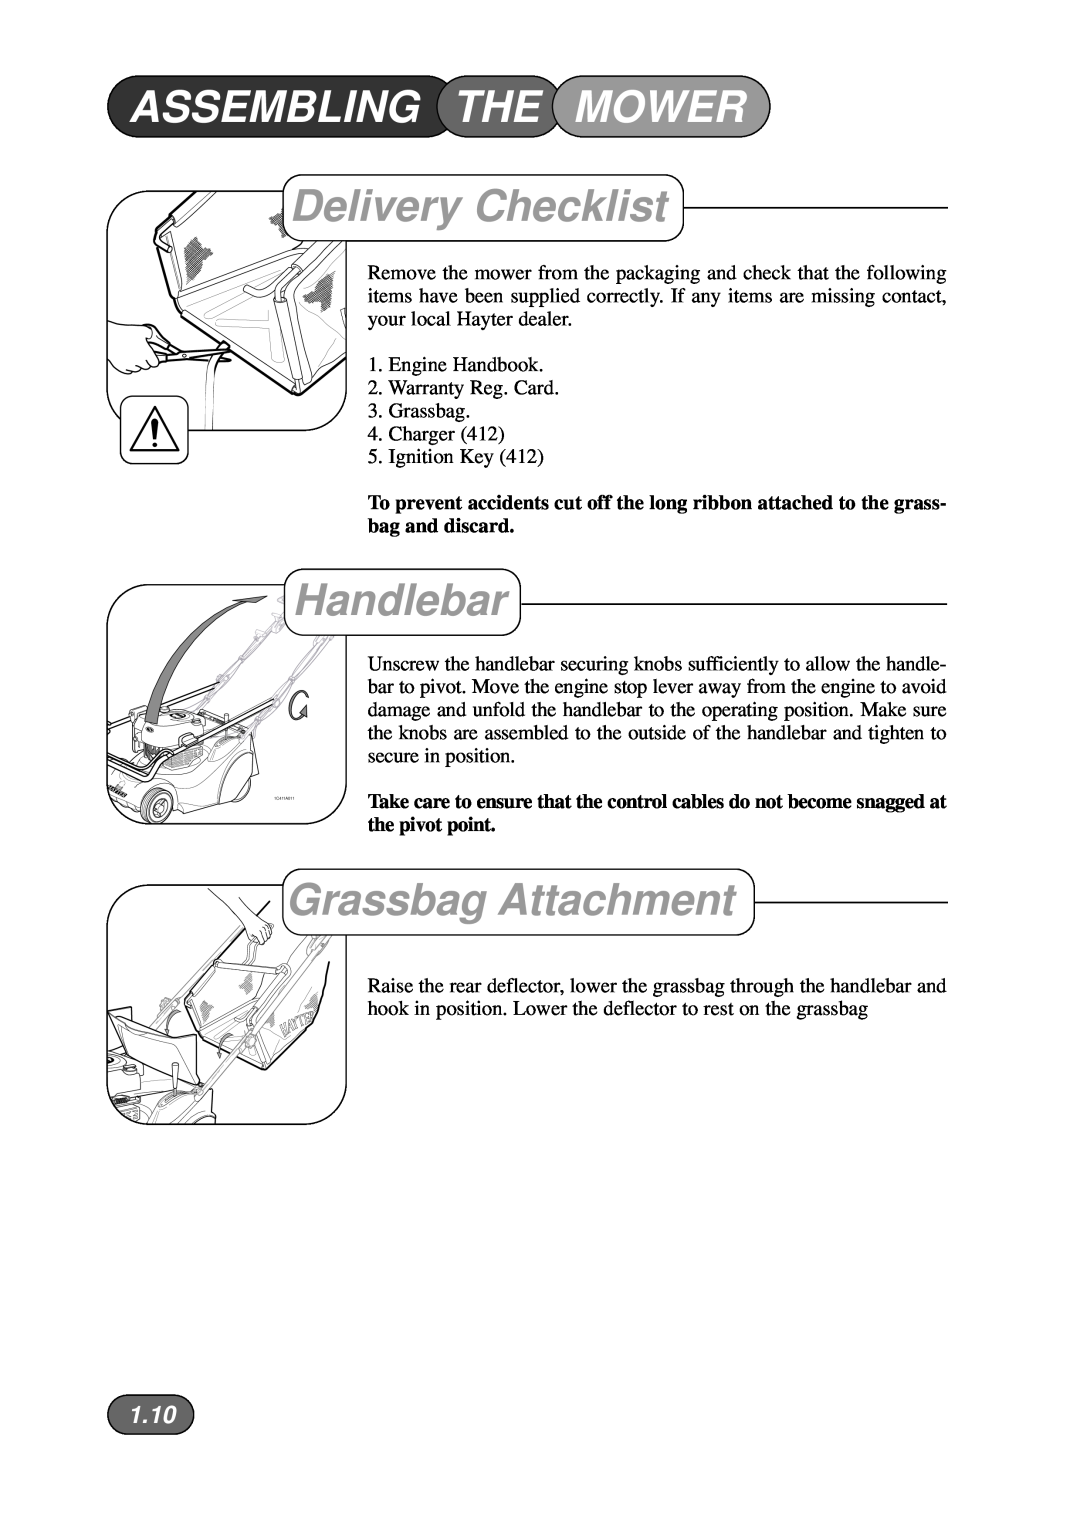 Briggs & Stratton Harrier 41 manual Assembling The Mower, Delivery Checklist, Grassbag Attachment, 1.10, Handlebar 